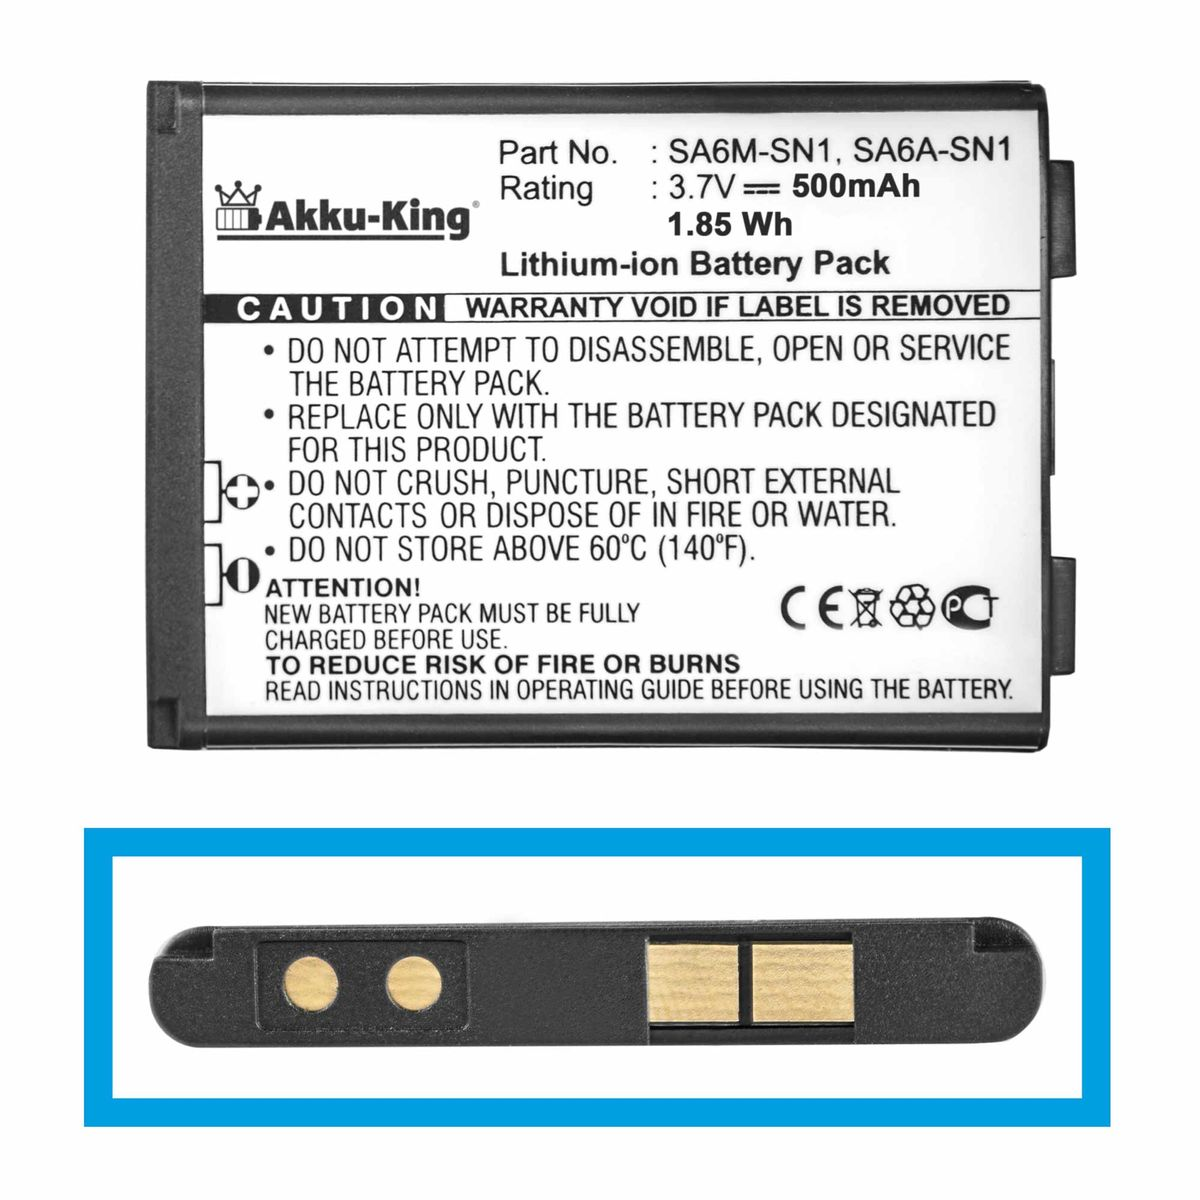 Volt, 500mAh mit Li-Ion Handy-Akku, AKKU-KING Sagem SA8A-SN5 kompatibel 3.7 Akku